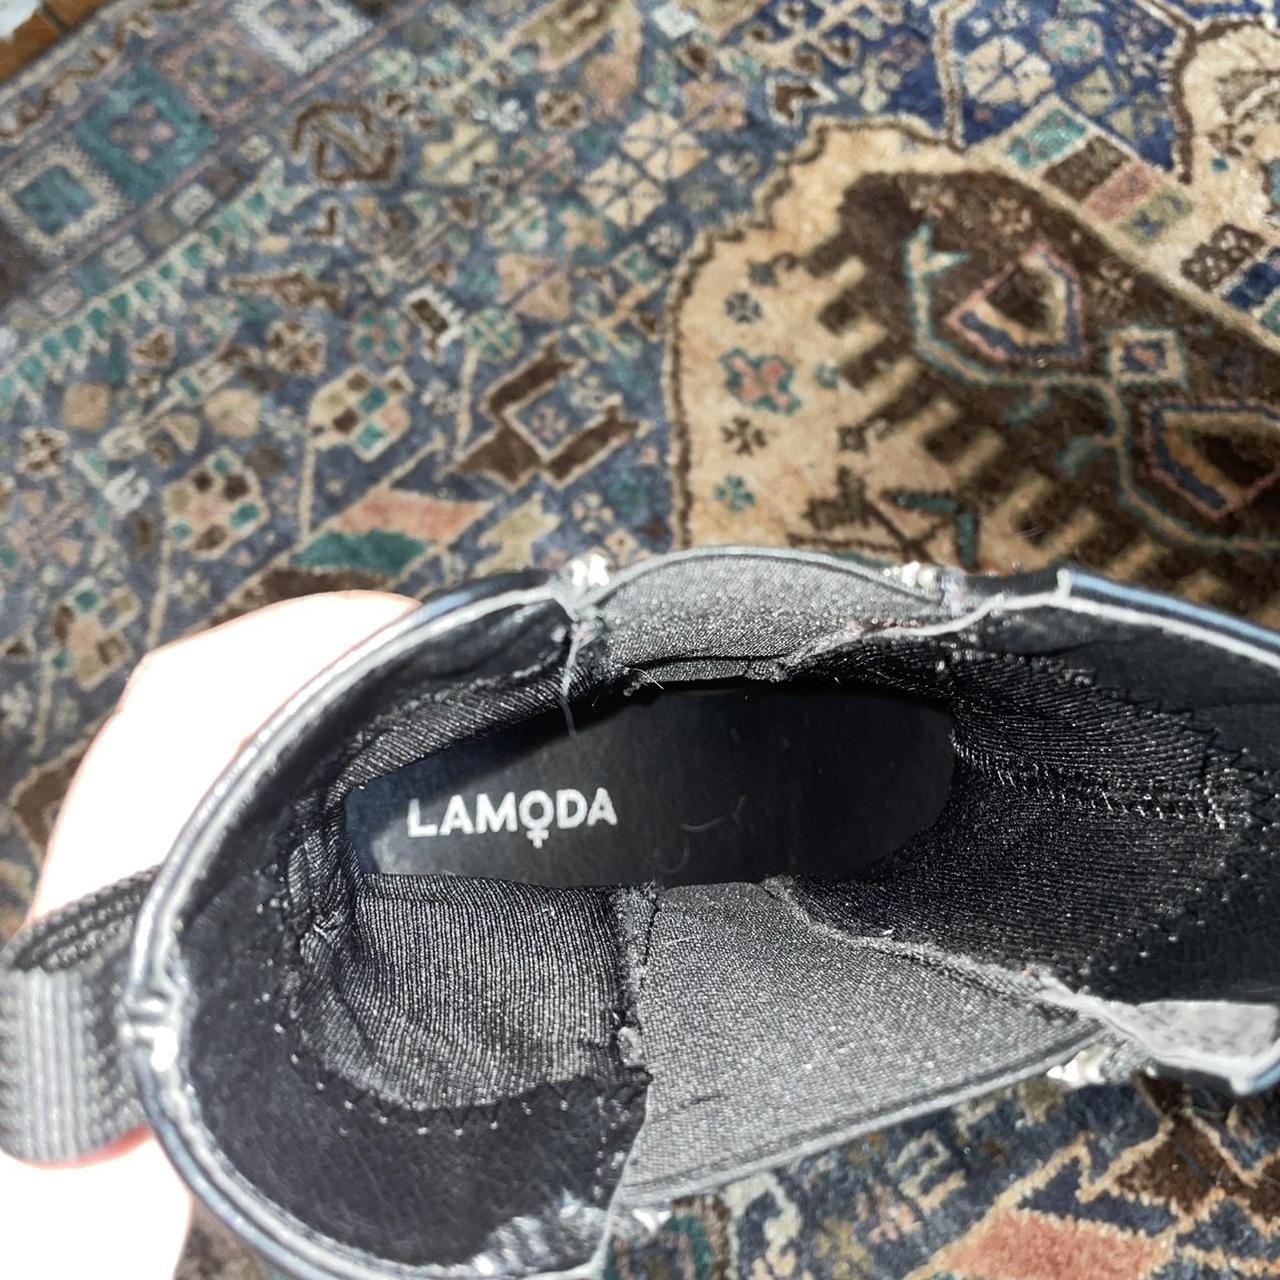 Product Image 3 - Stunning Lamoda black platform boots!